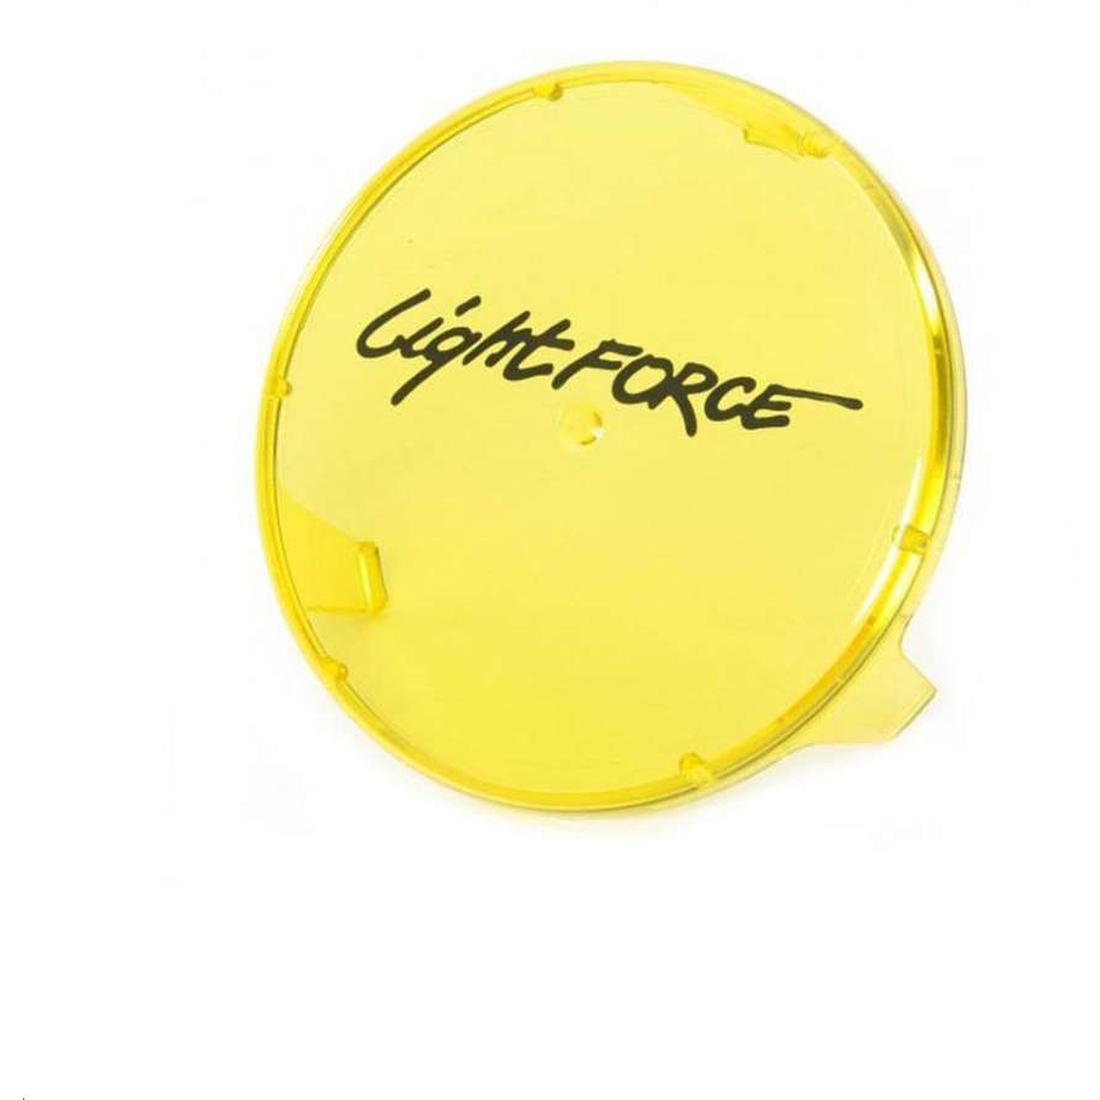 Lightforce Striker 170 Driving Light Cover - Yellow Spot Filter image